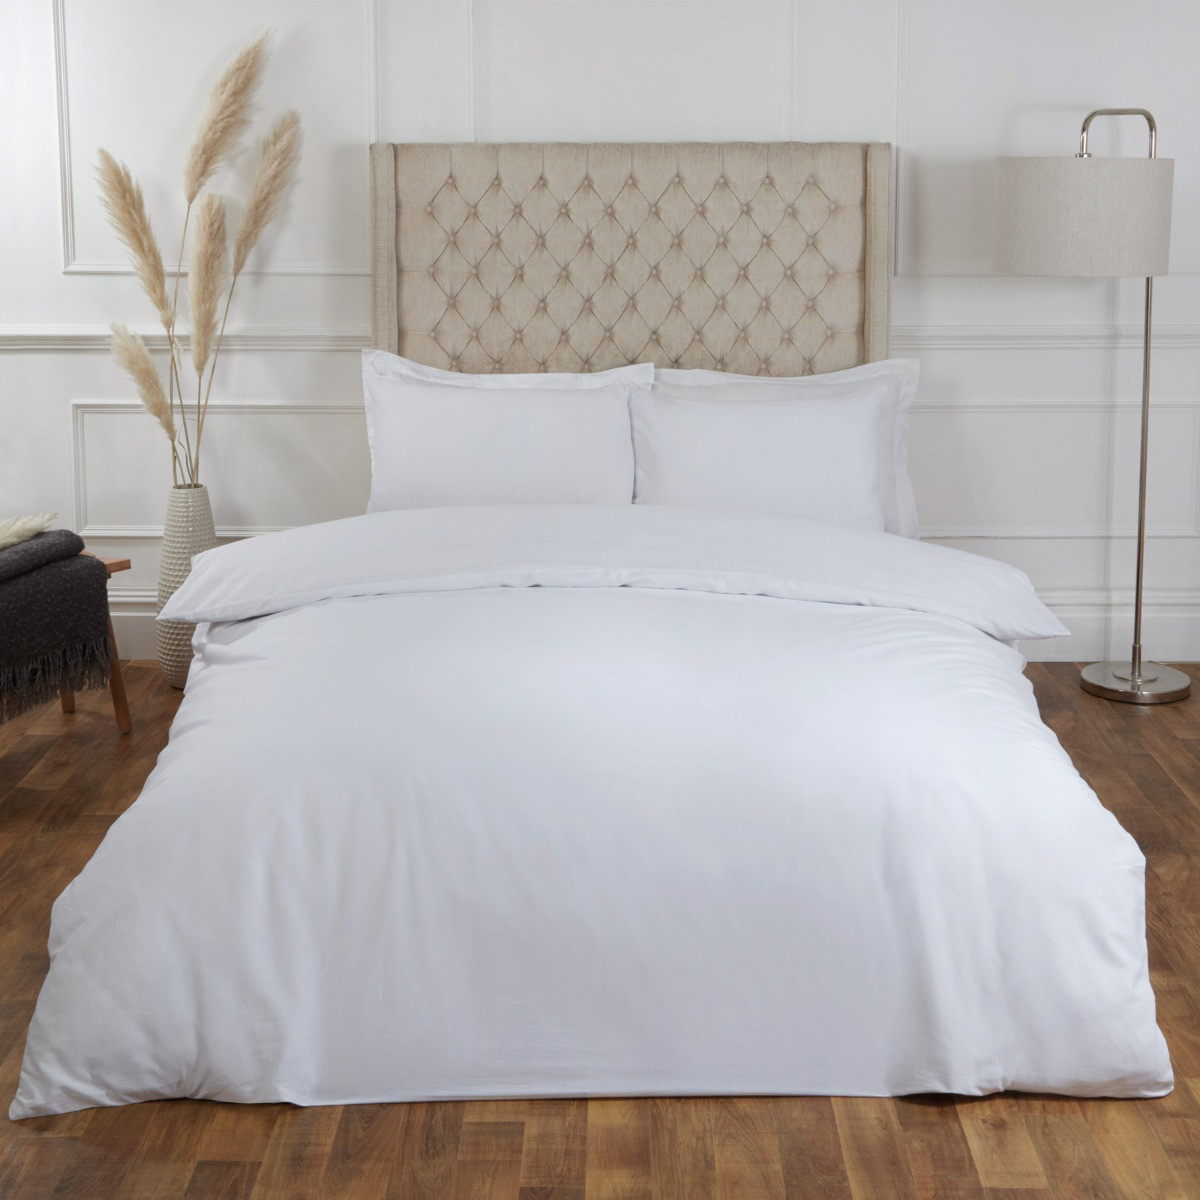 Highams Plain 100% Cotton Duvet Cover with Pillow Case Bedding Set, White - Super King>